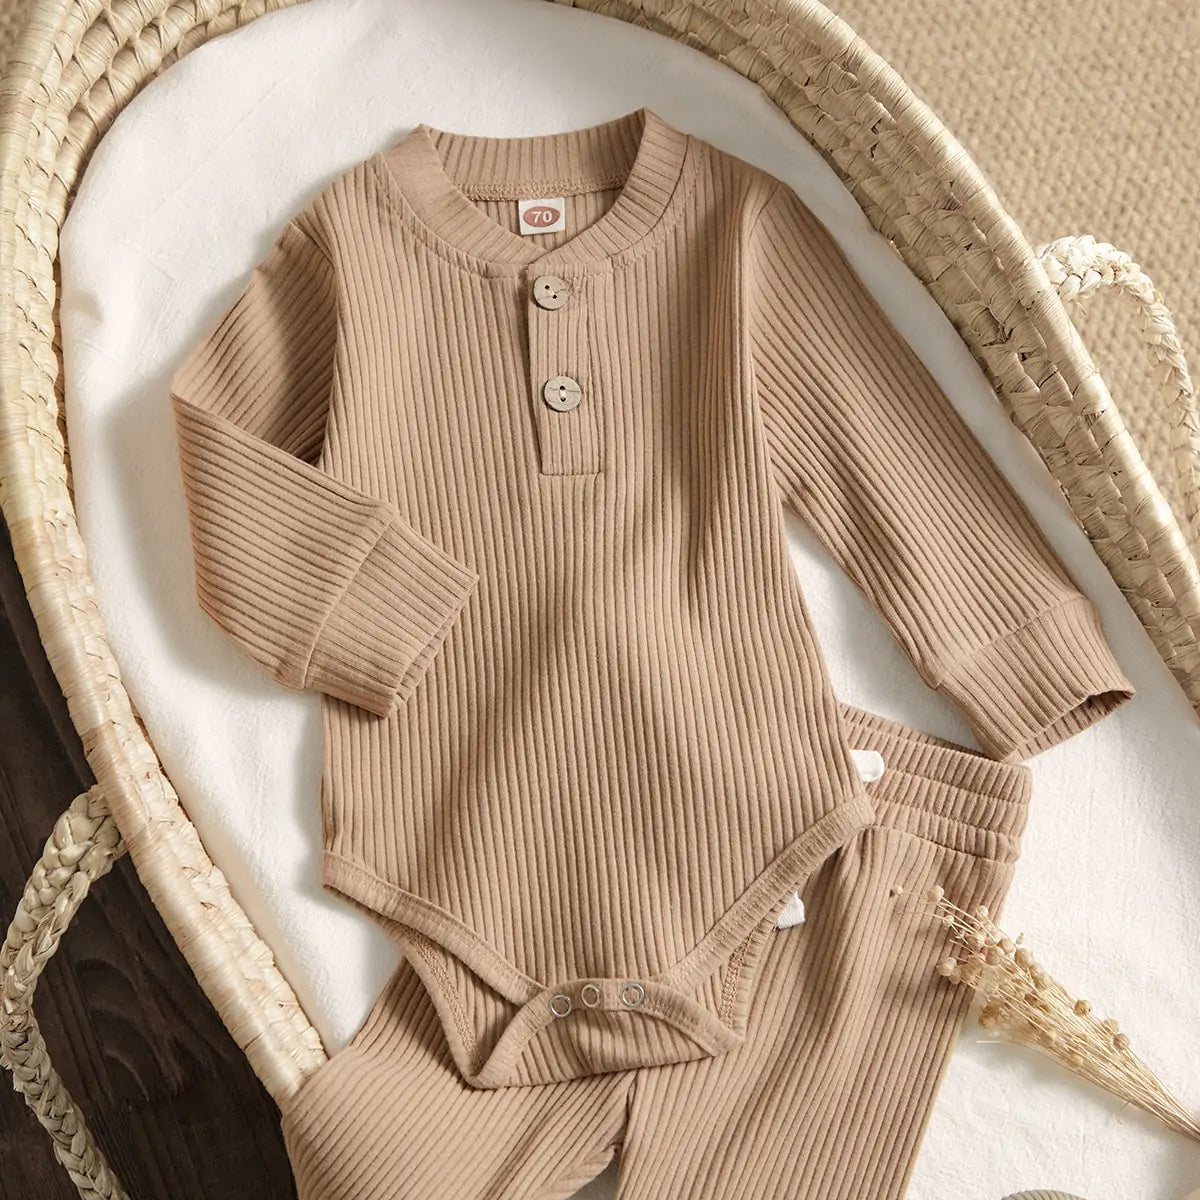 Infant Knitted Clothing set